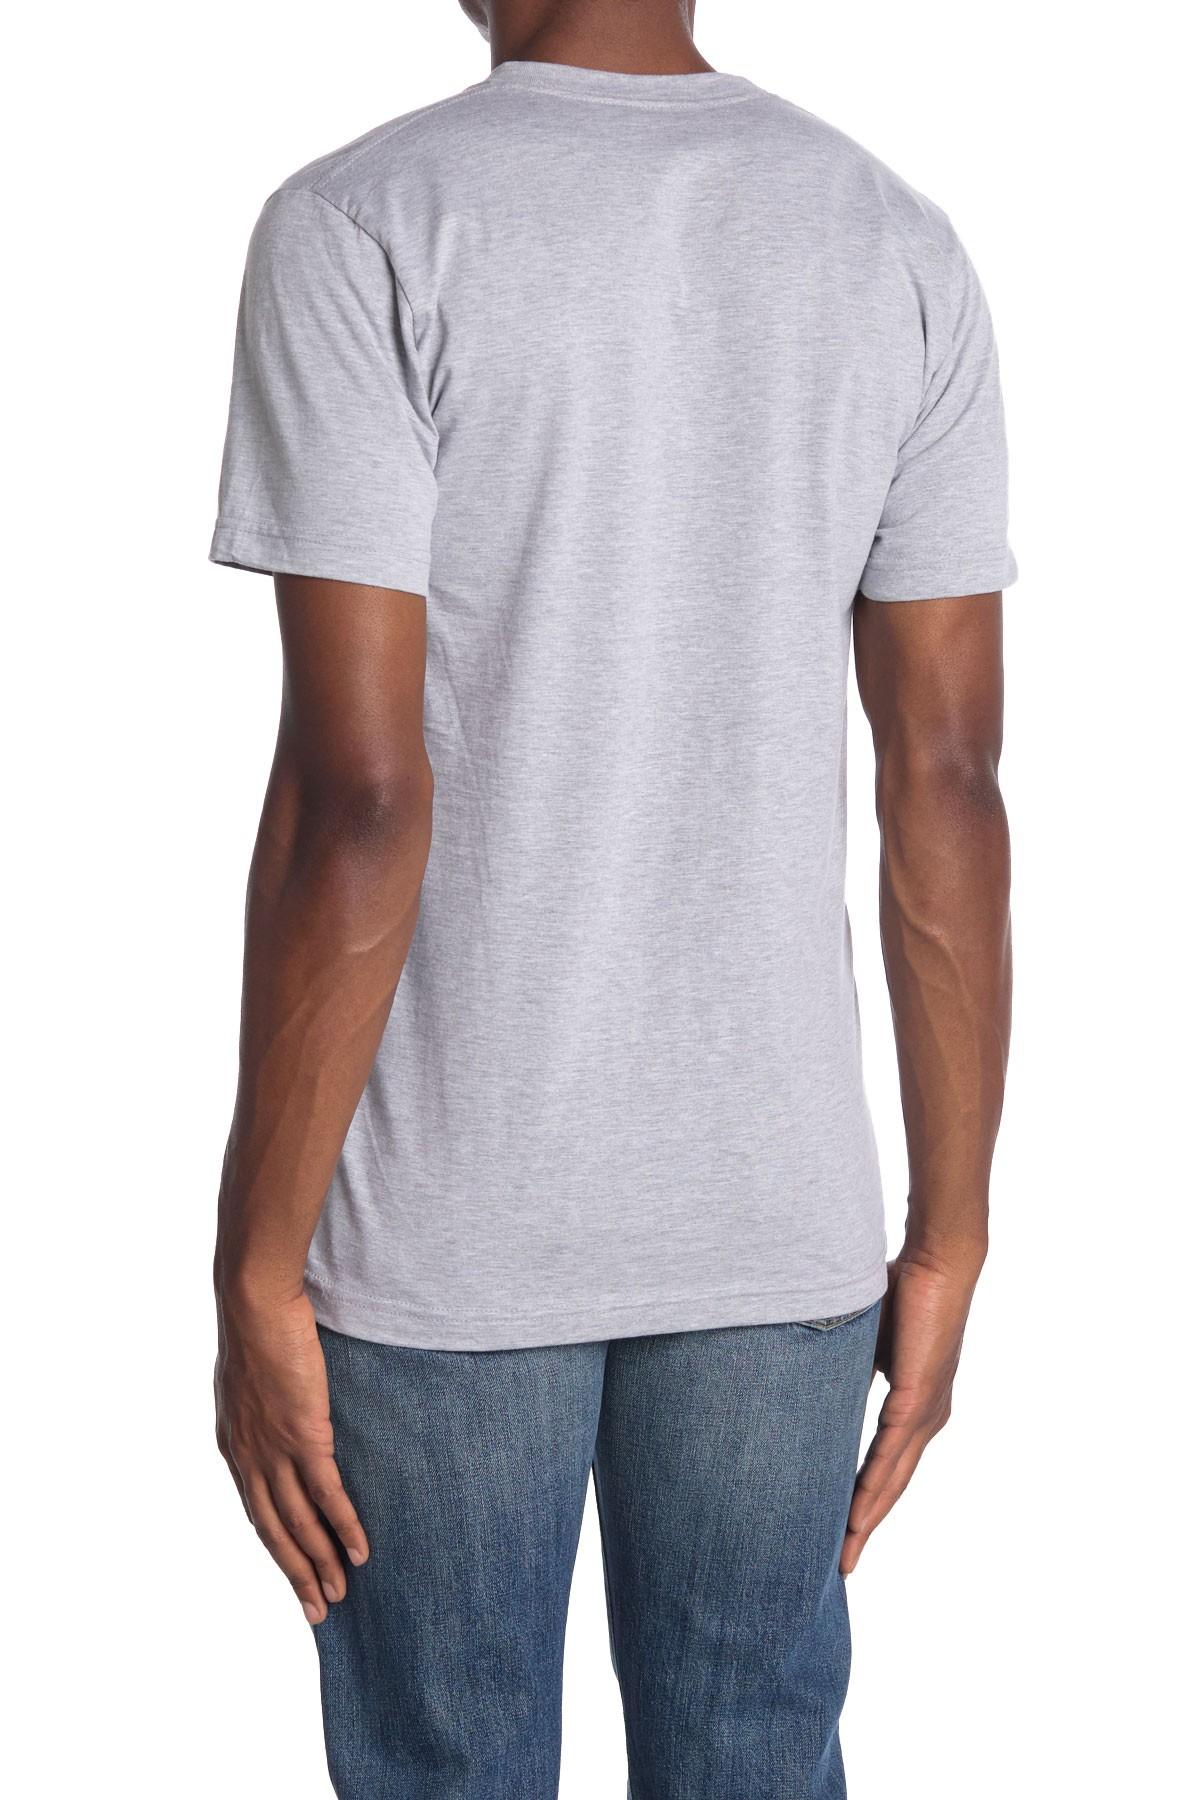 New Balance Cotton 990 V5 Shoe Graphic T-shirt for Men | Lyst